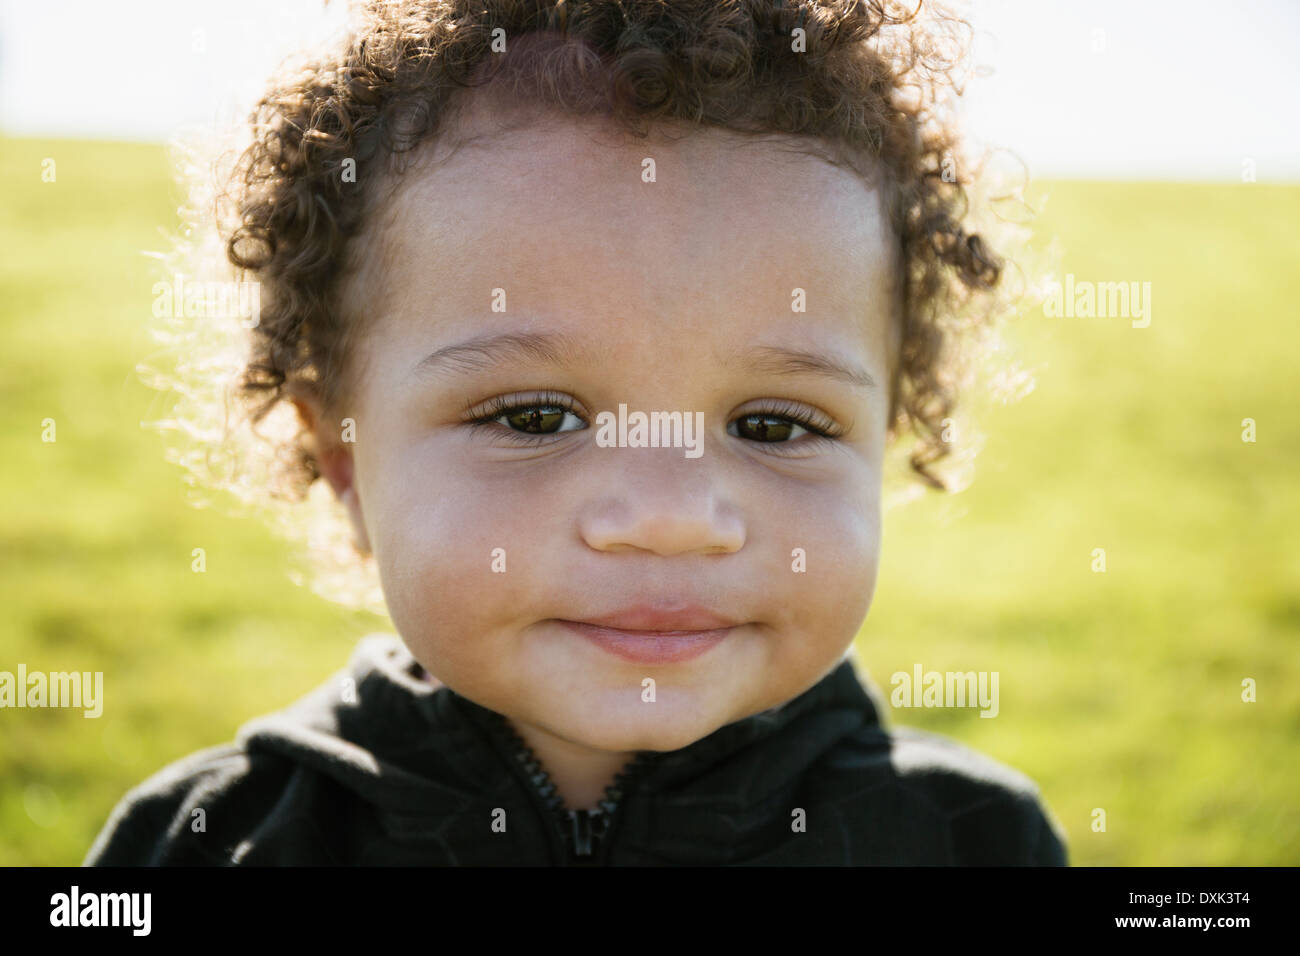 Lindo bebé cara con pelo rizado Fotografía de stock - Alamy